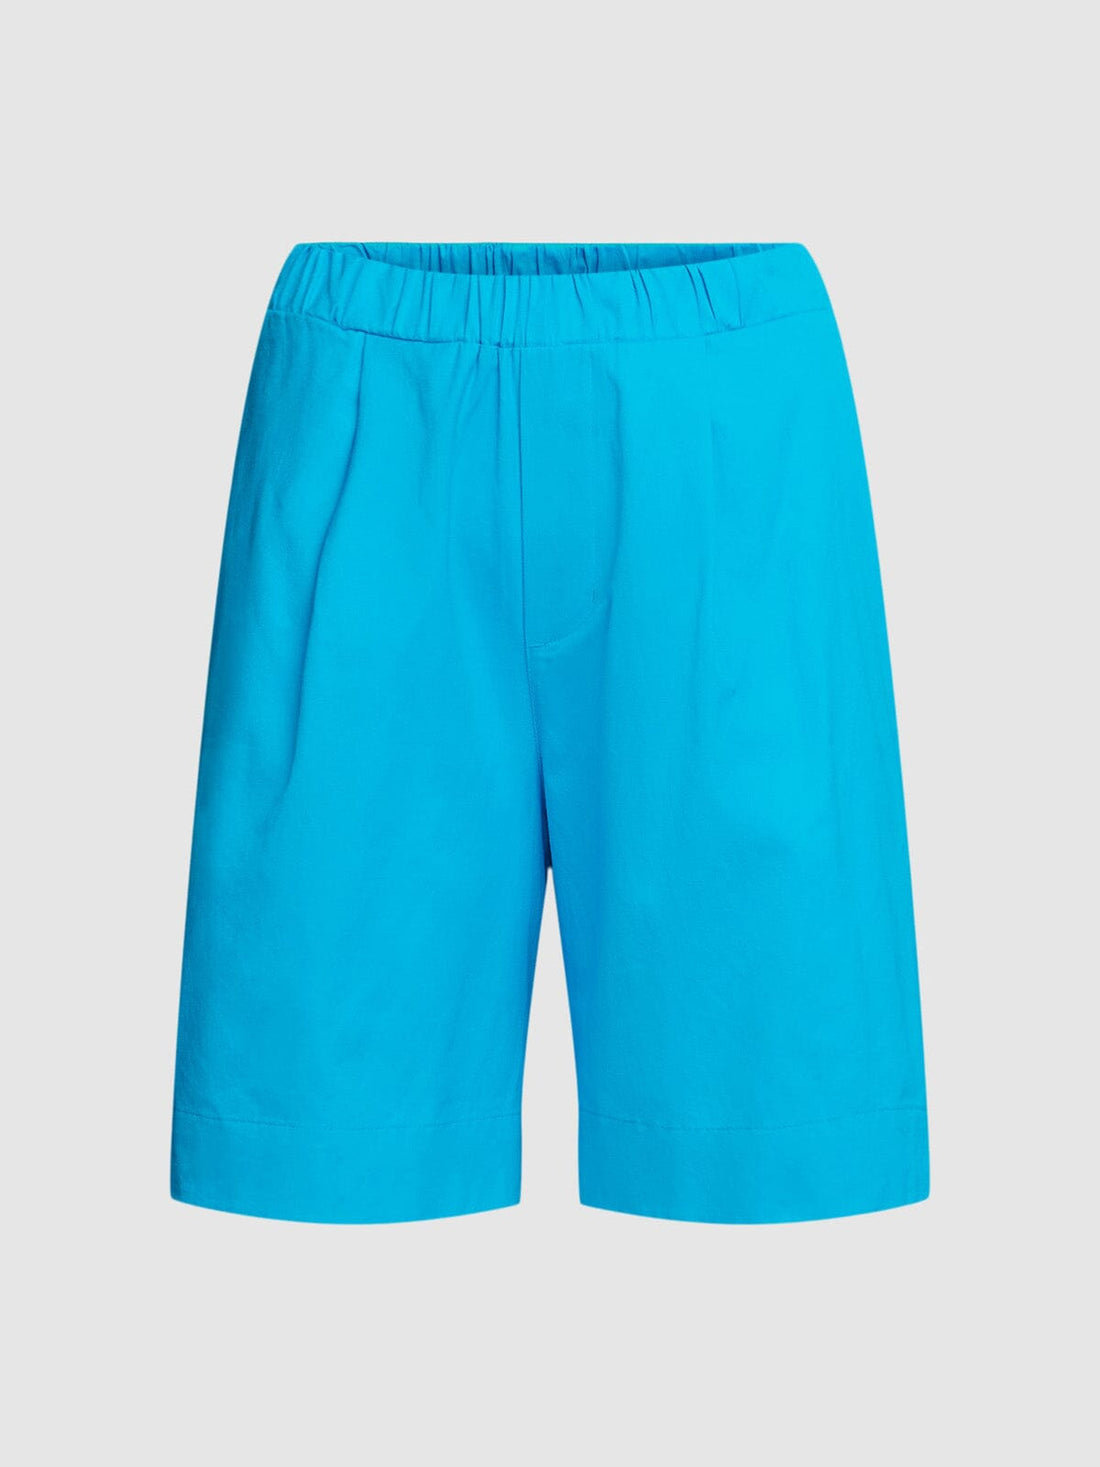 THE JOGG CONCEPT • Short Freja Shorts Malibu Blue XS 